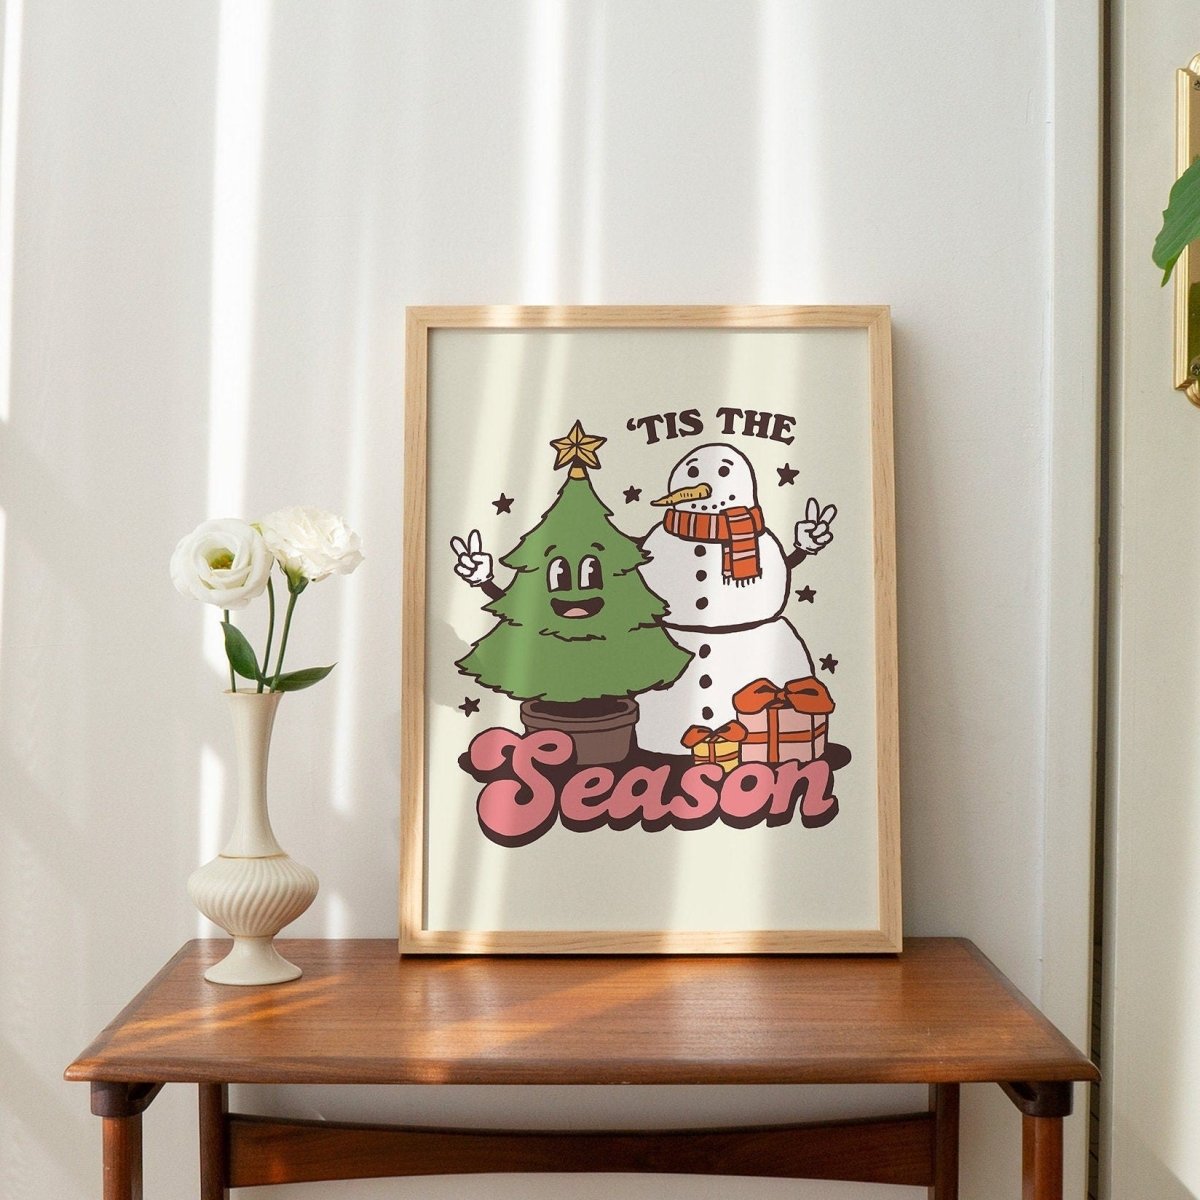 'Tis The Season' Snowman Christmas Decor - Art Prints - Kinder Planet Company